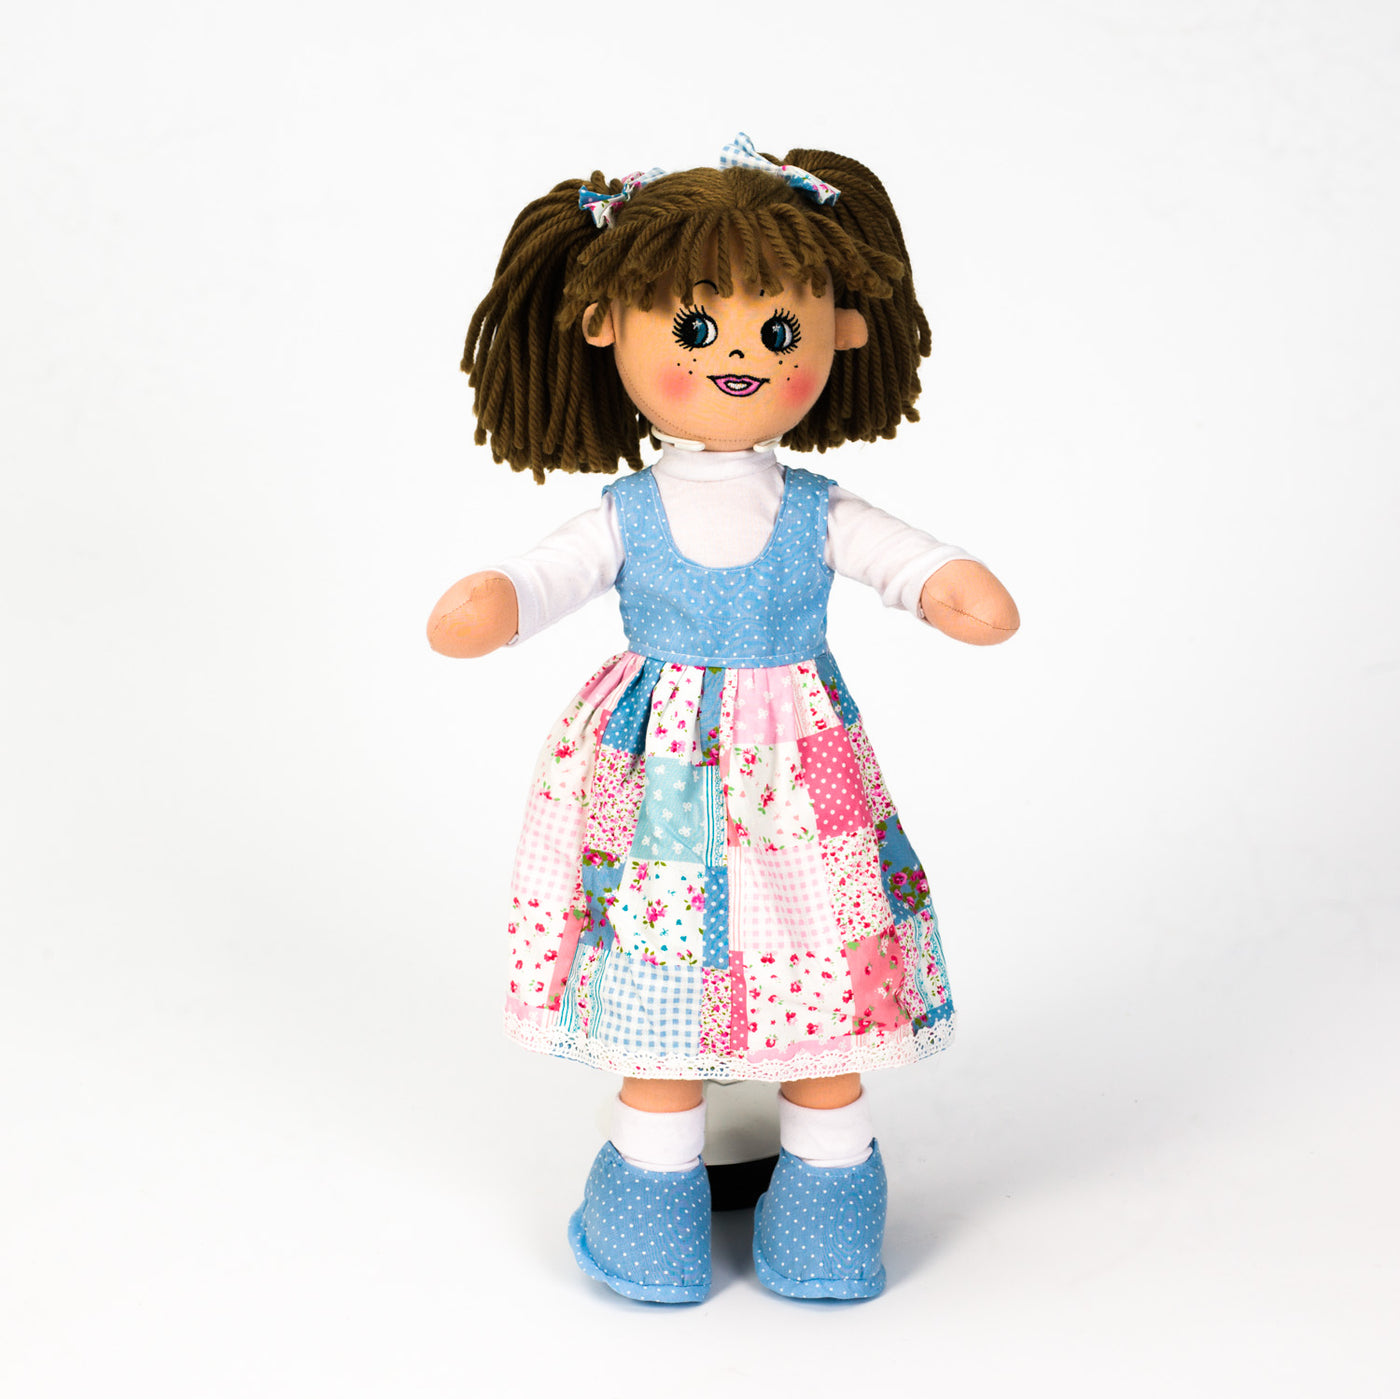 Personalised Rag Doll - Ella Rose.